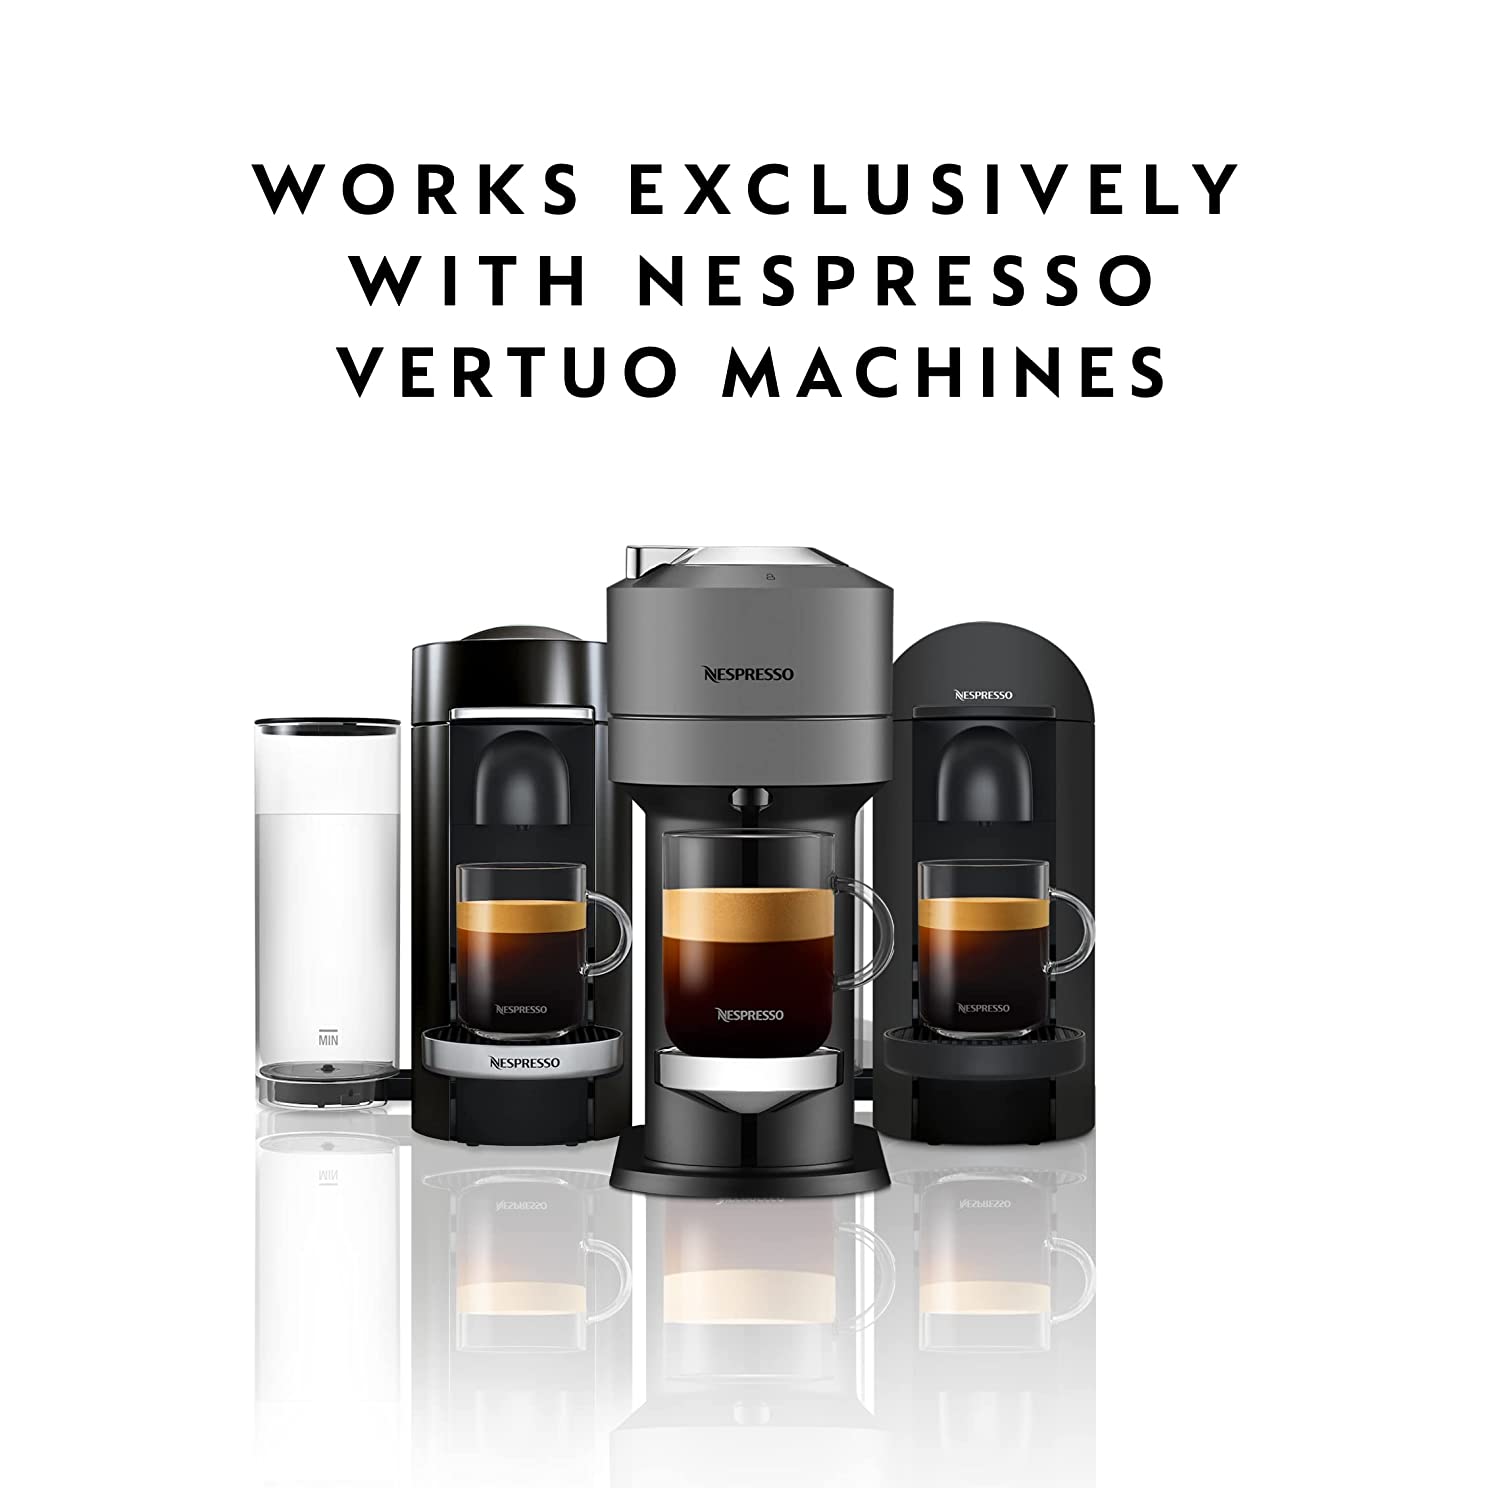 Nespresso Capsules VertuoLine, Solelio, Mild Roast Coffee, Coffee Pods, 7.77 Ounce (VERTUOLINE ONLY), 10 Count (Pack of 3)